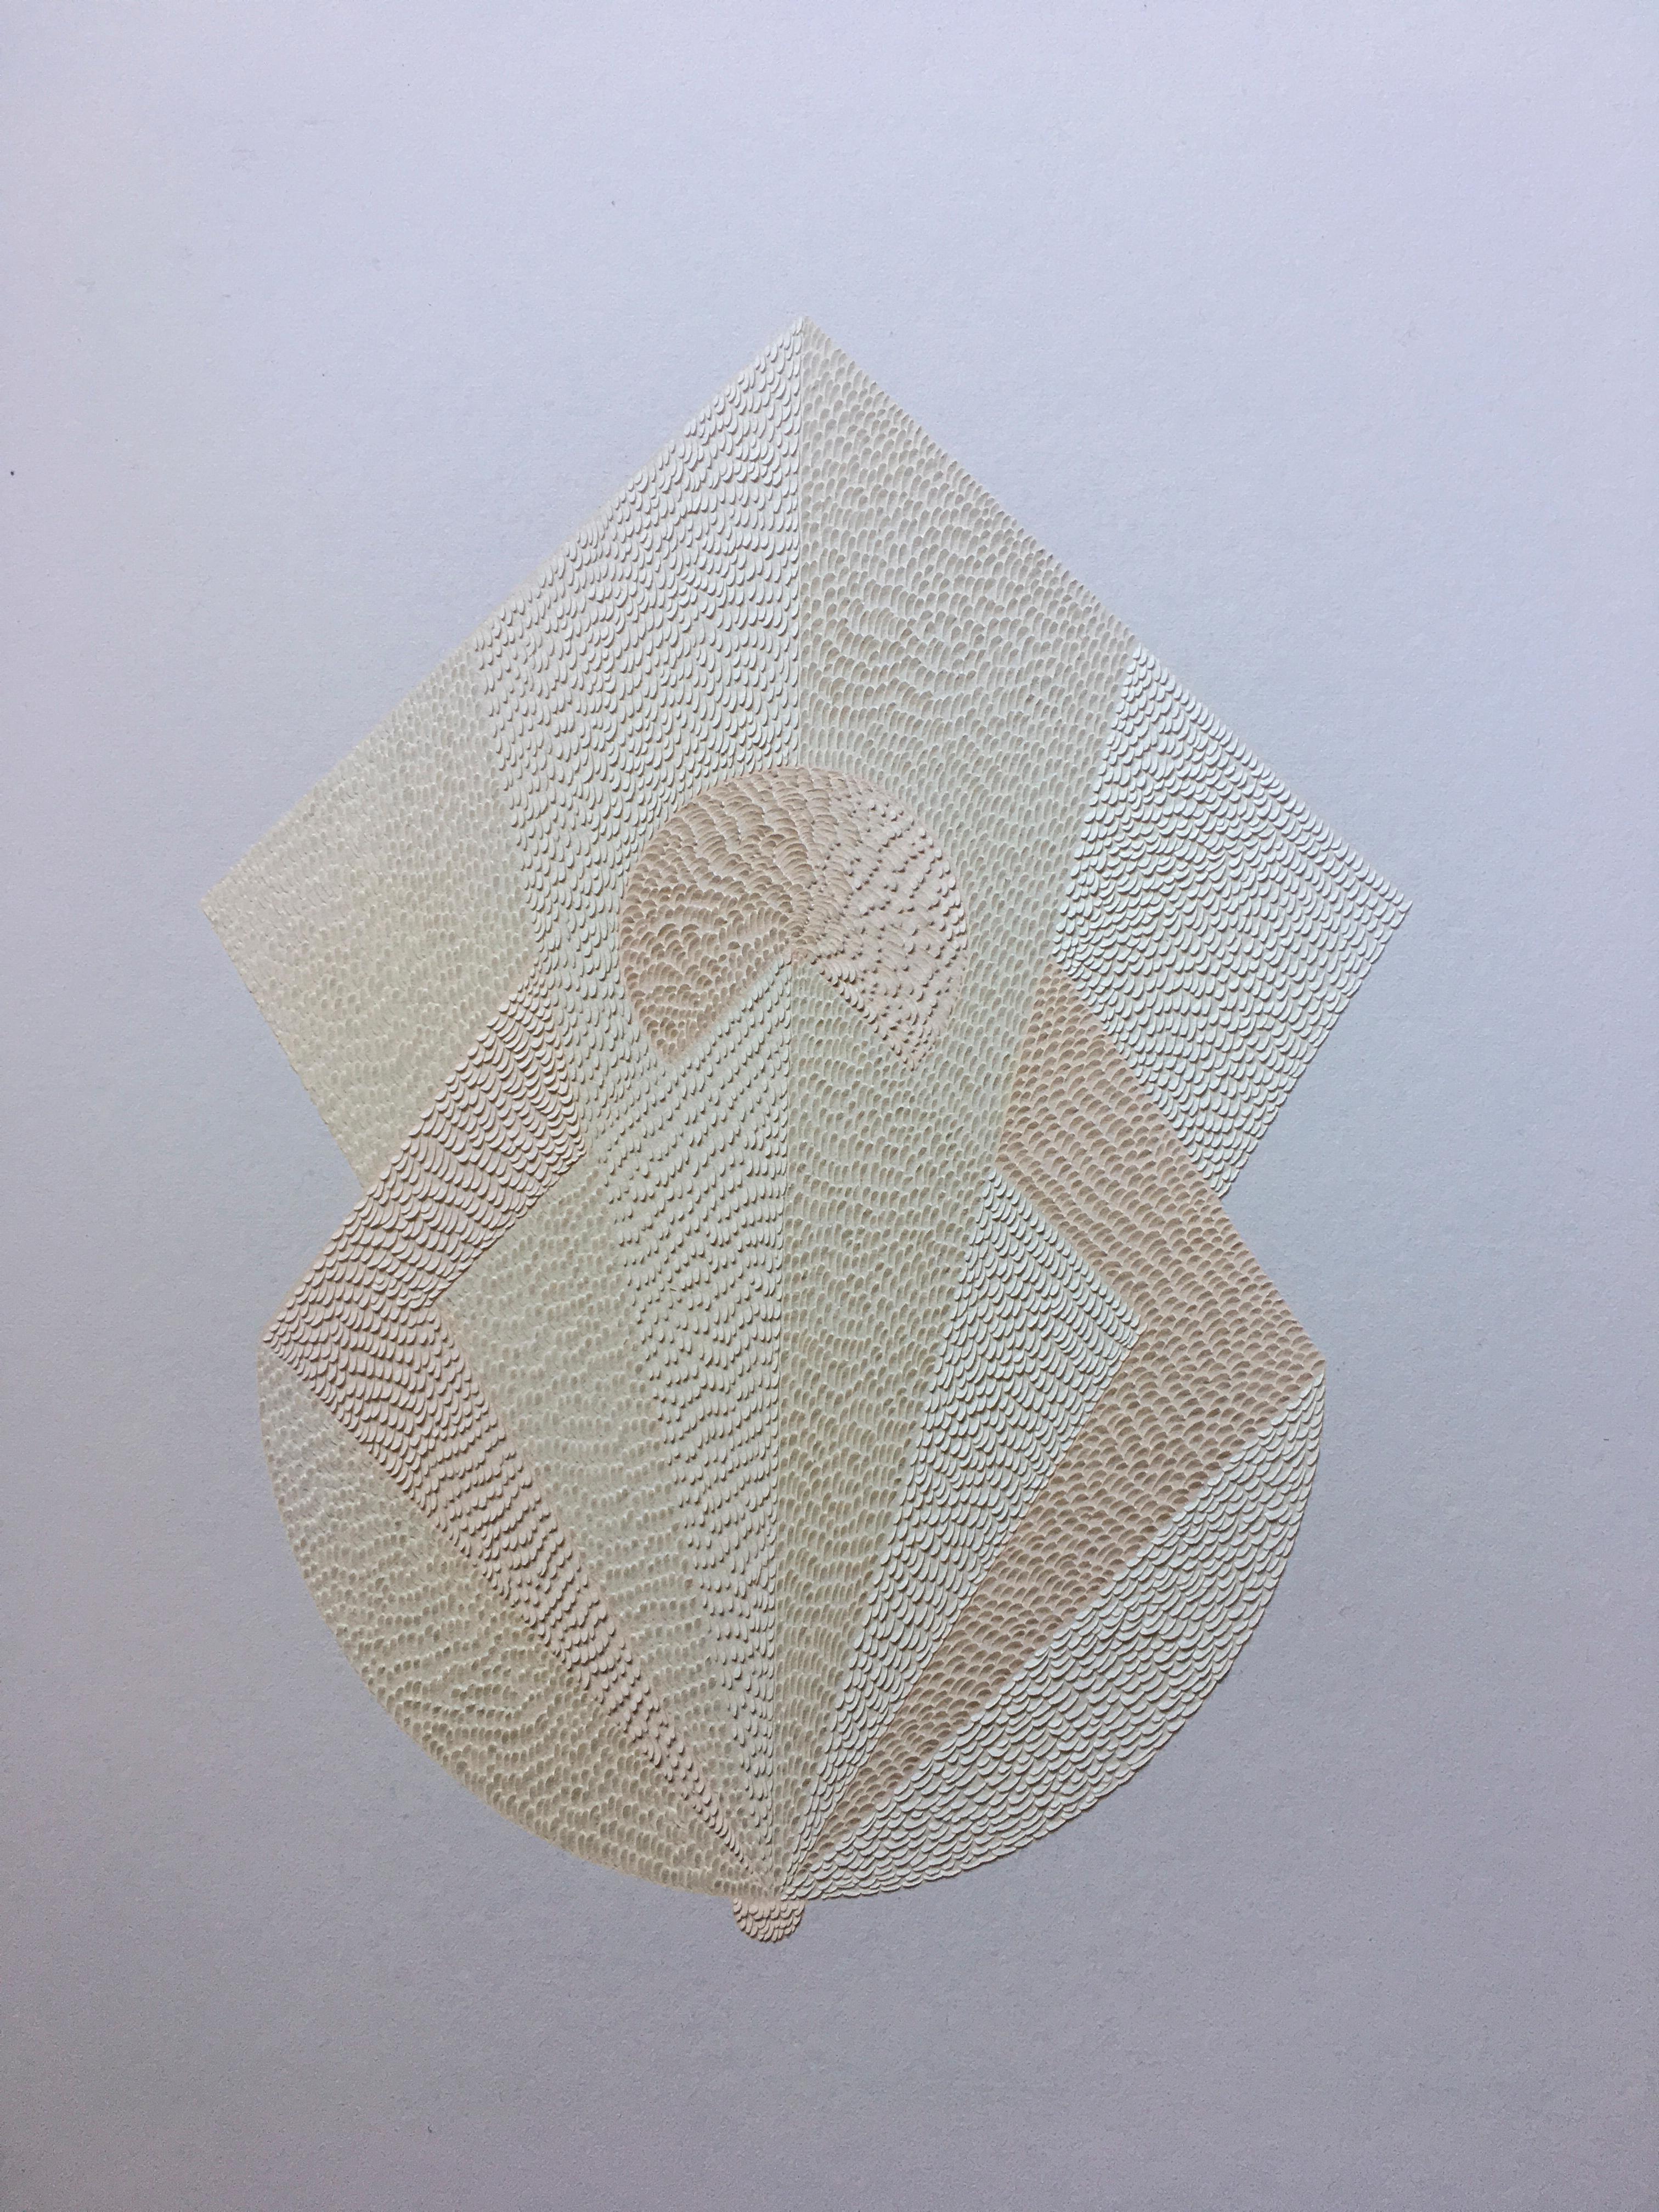 beige textured paper